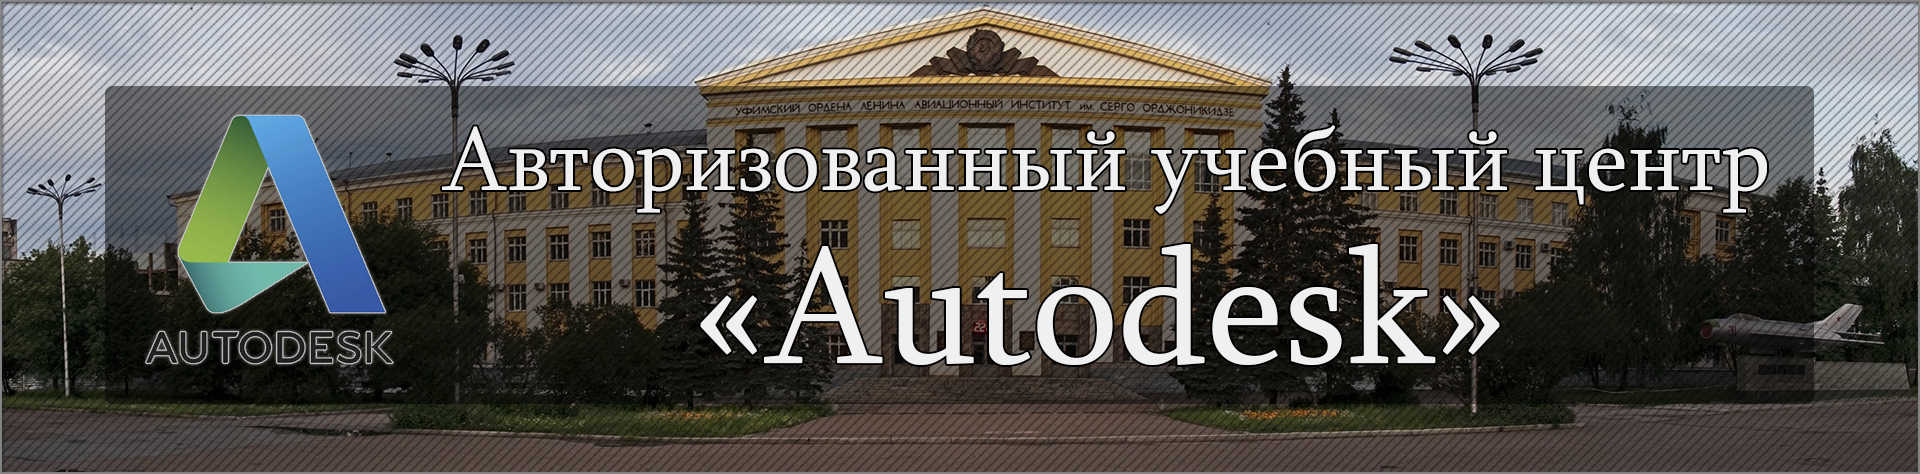 autodesk-header